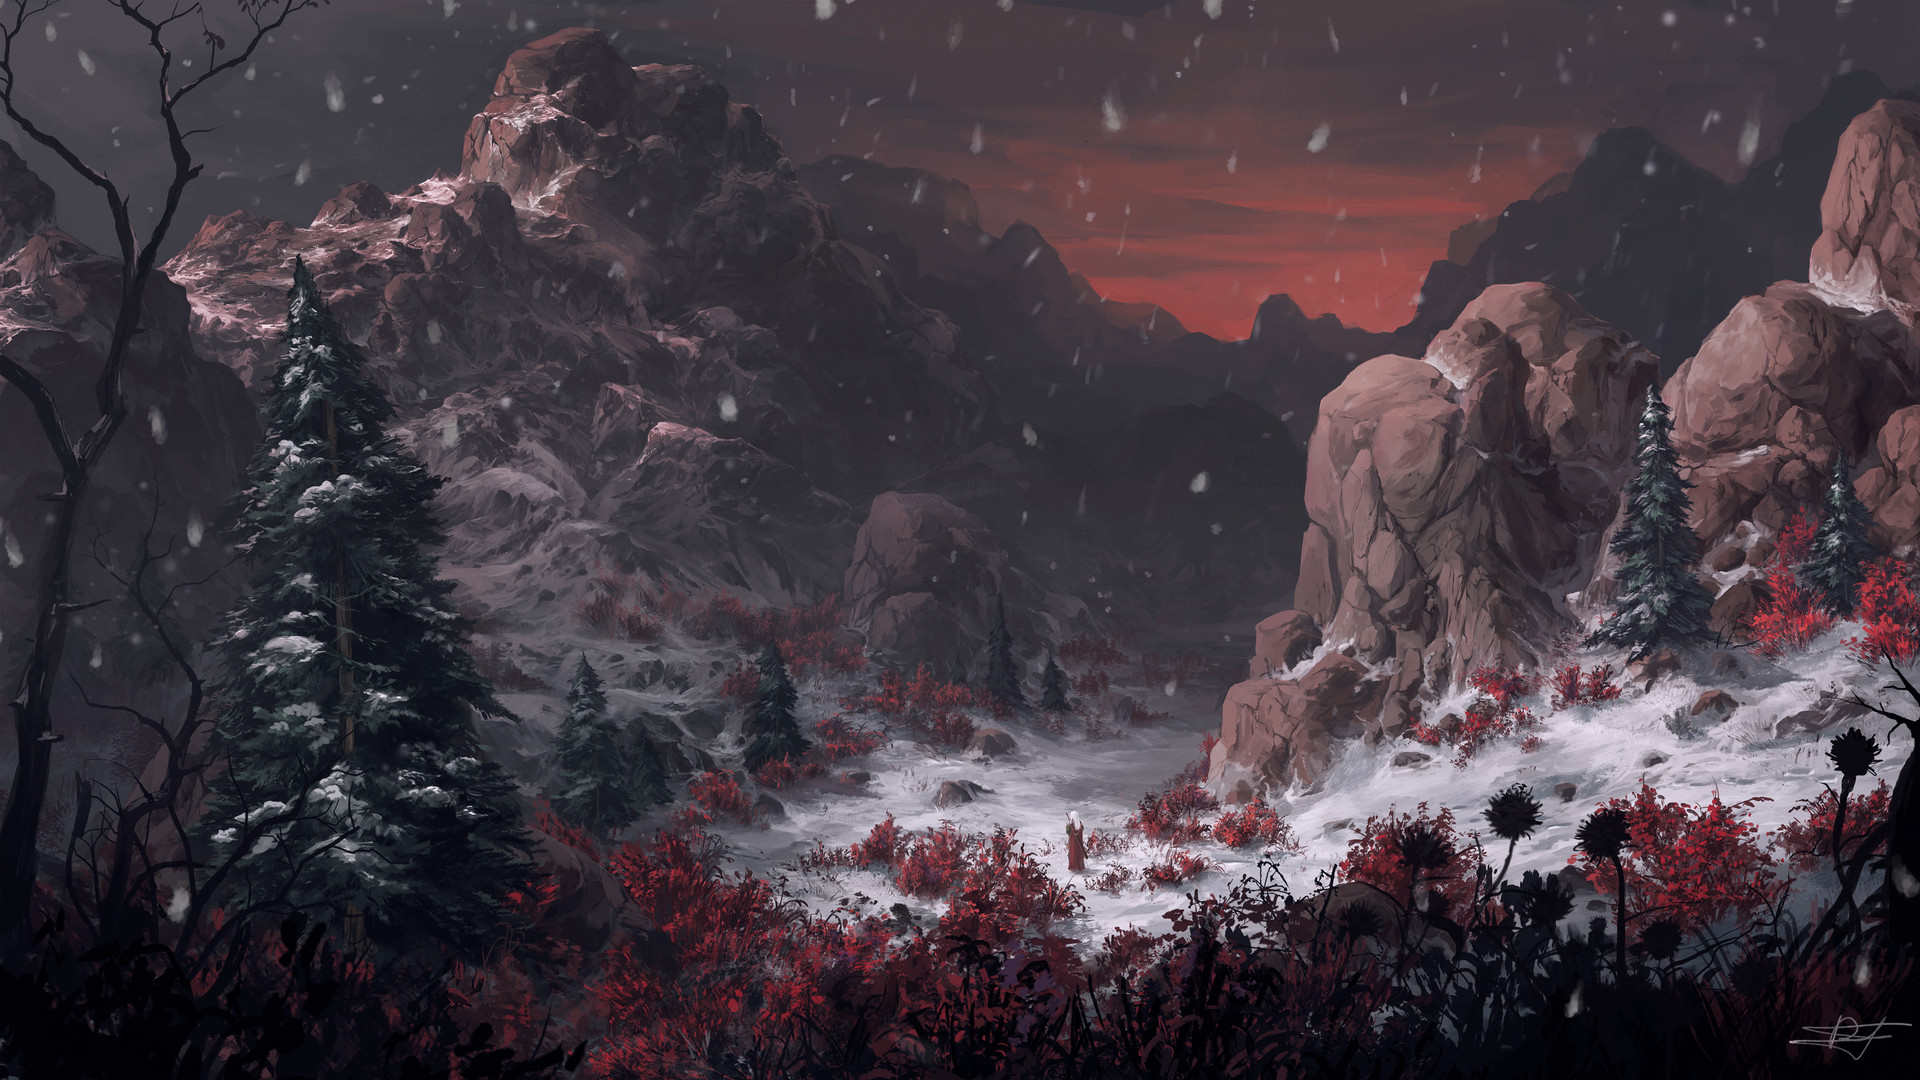 General 1920x1080 landscape mountains artwork digital art fantasy art winter snow rocks red Max Suleimanov watermarked